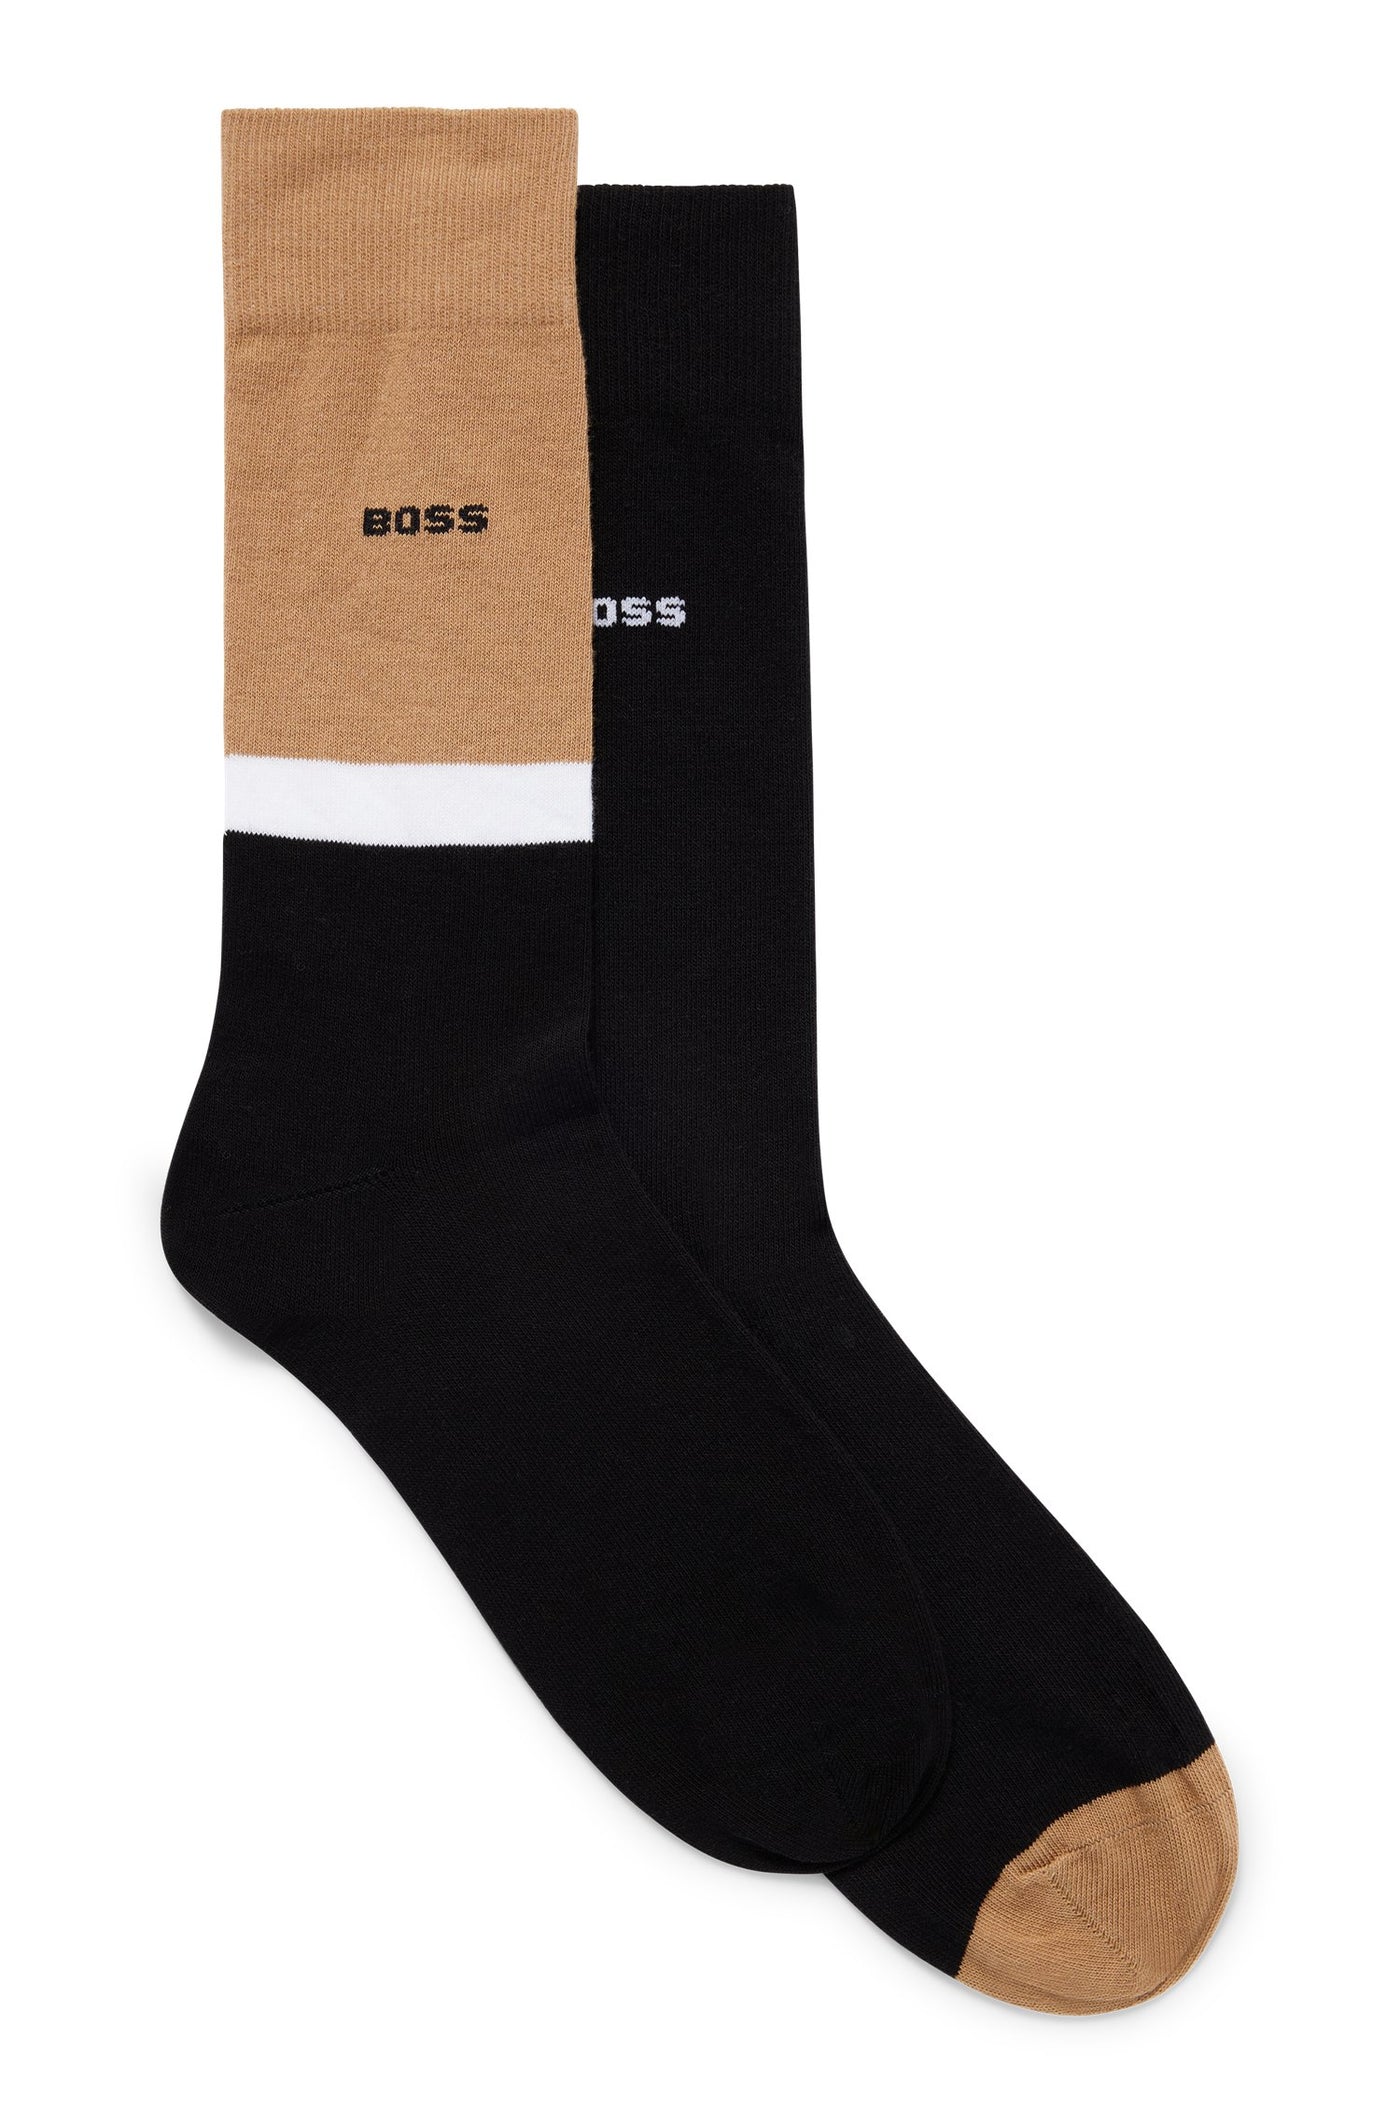 BOSS 2P RS Block Colour CC Sock in Black